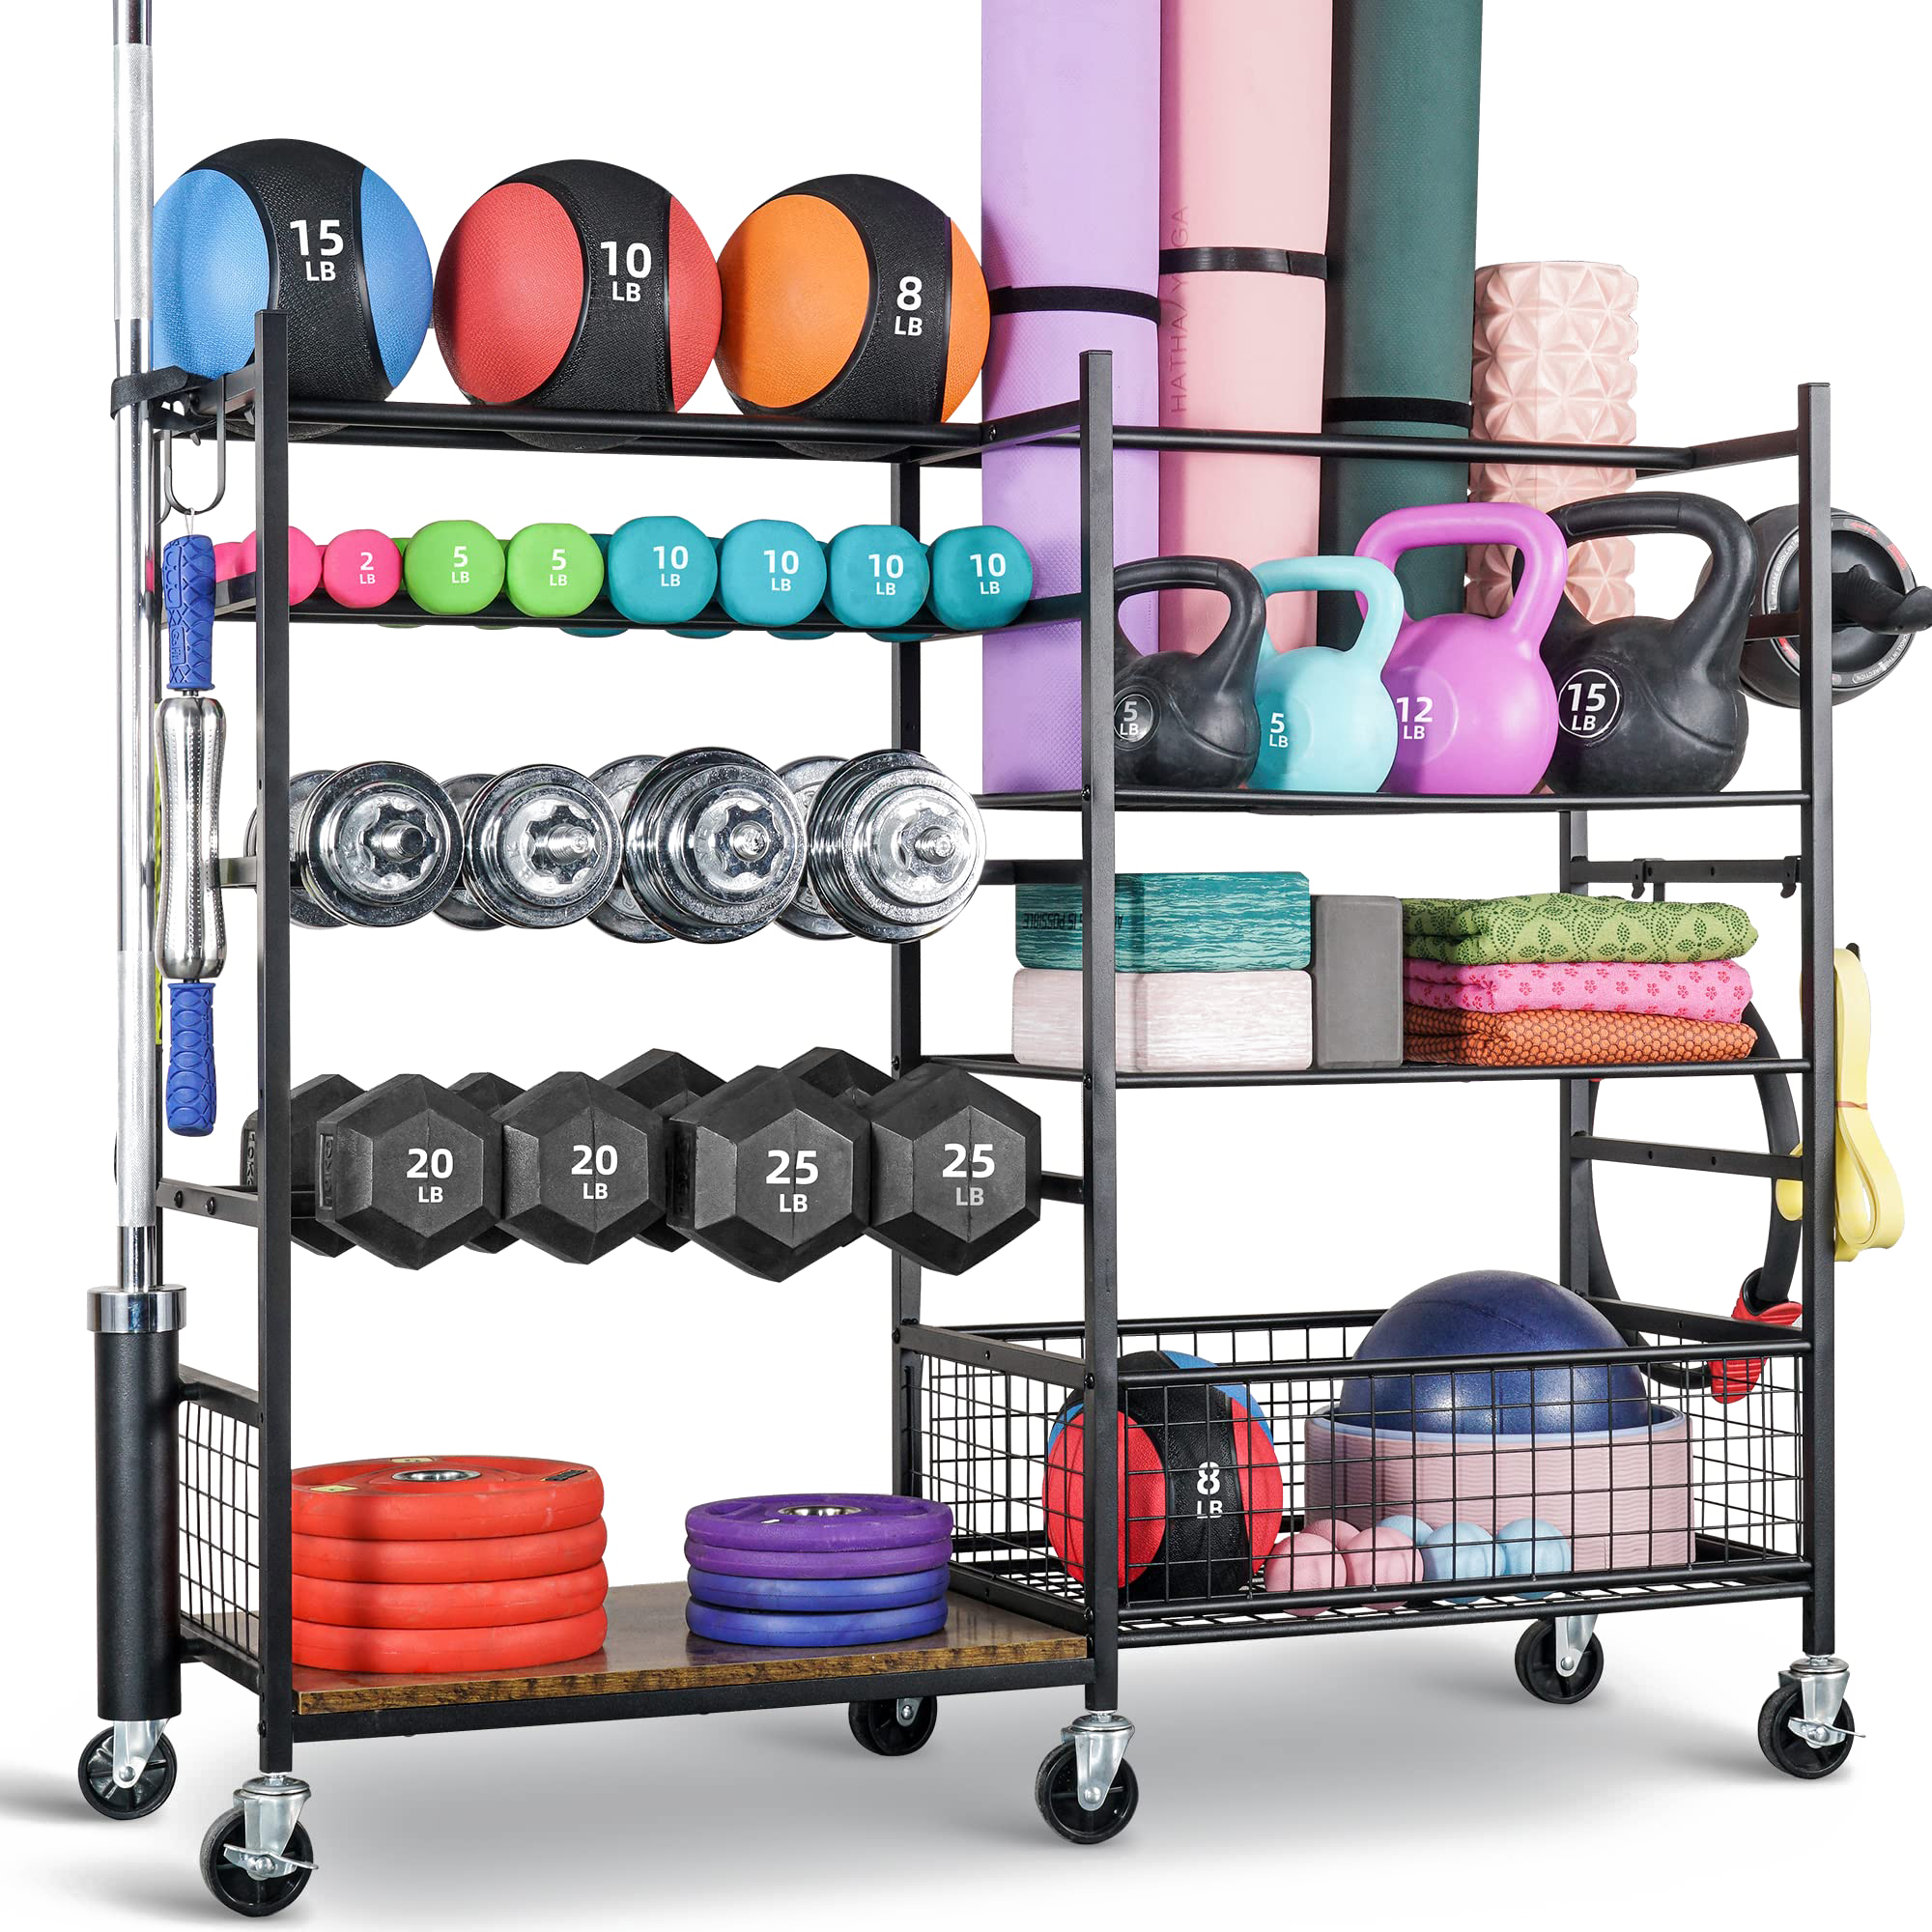 Mythinglogic Yoga Mat Storage Racks,Home Gym Storage Rack for Dumbbells  Kettlebells Foam Roller, Yoga Strap and Resistance Bands, Workout Equipment  Storage Organizer With Hooks and Wheels 